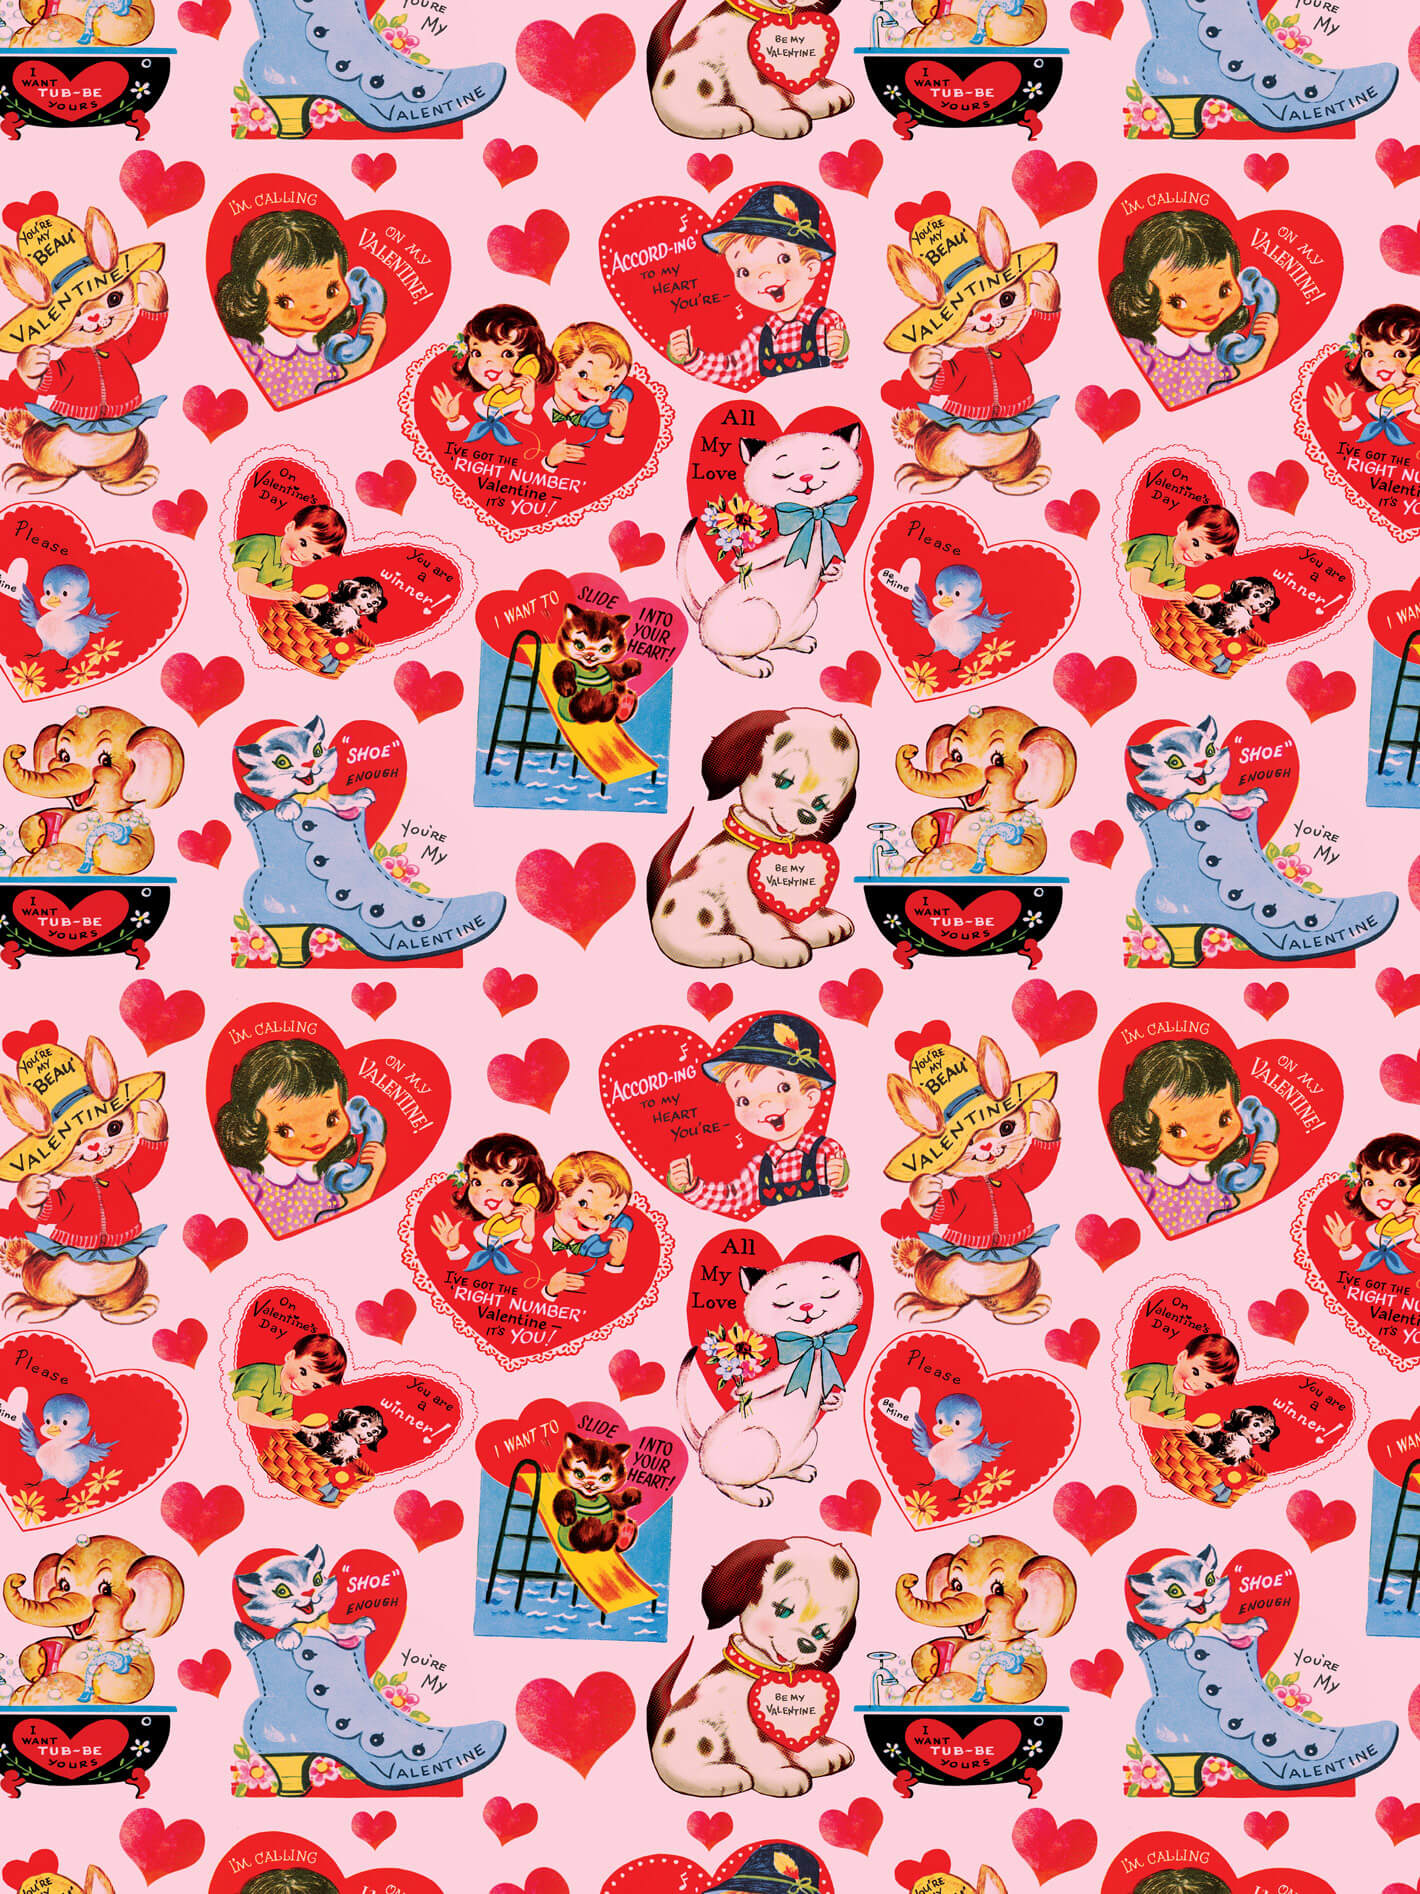 Kitschy Valentine pattern.